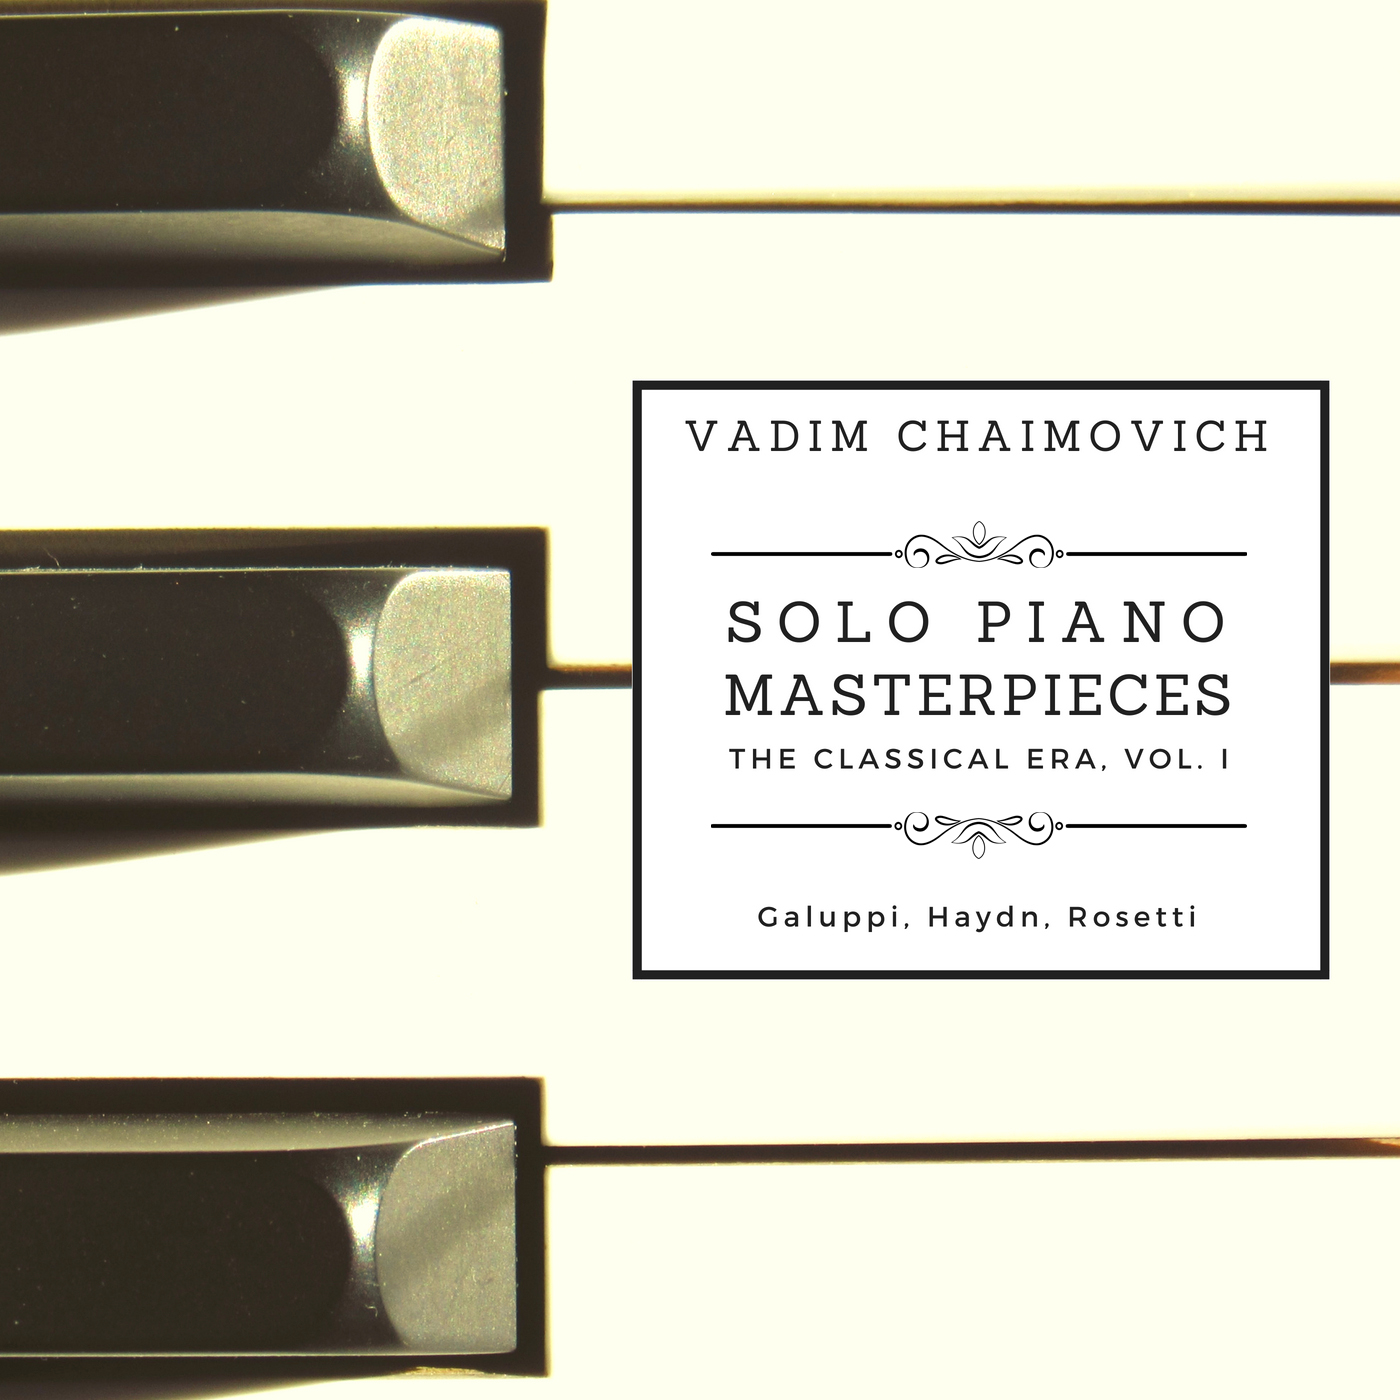 Solo Piano Masterpieces: The Classical Era Vol. I